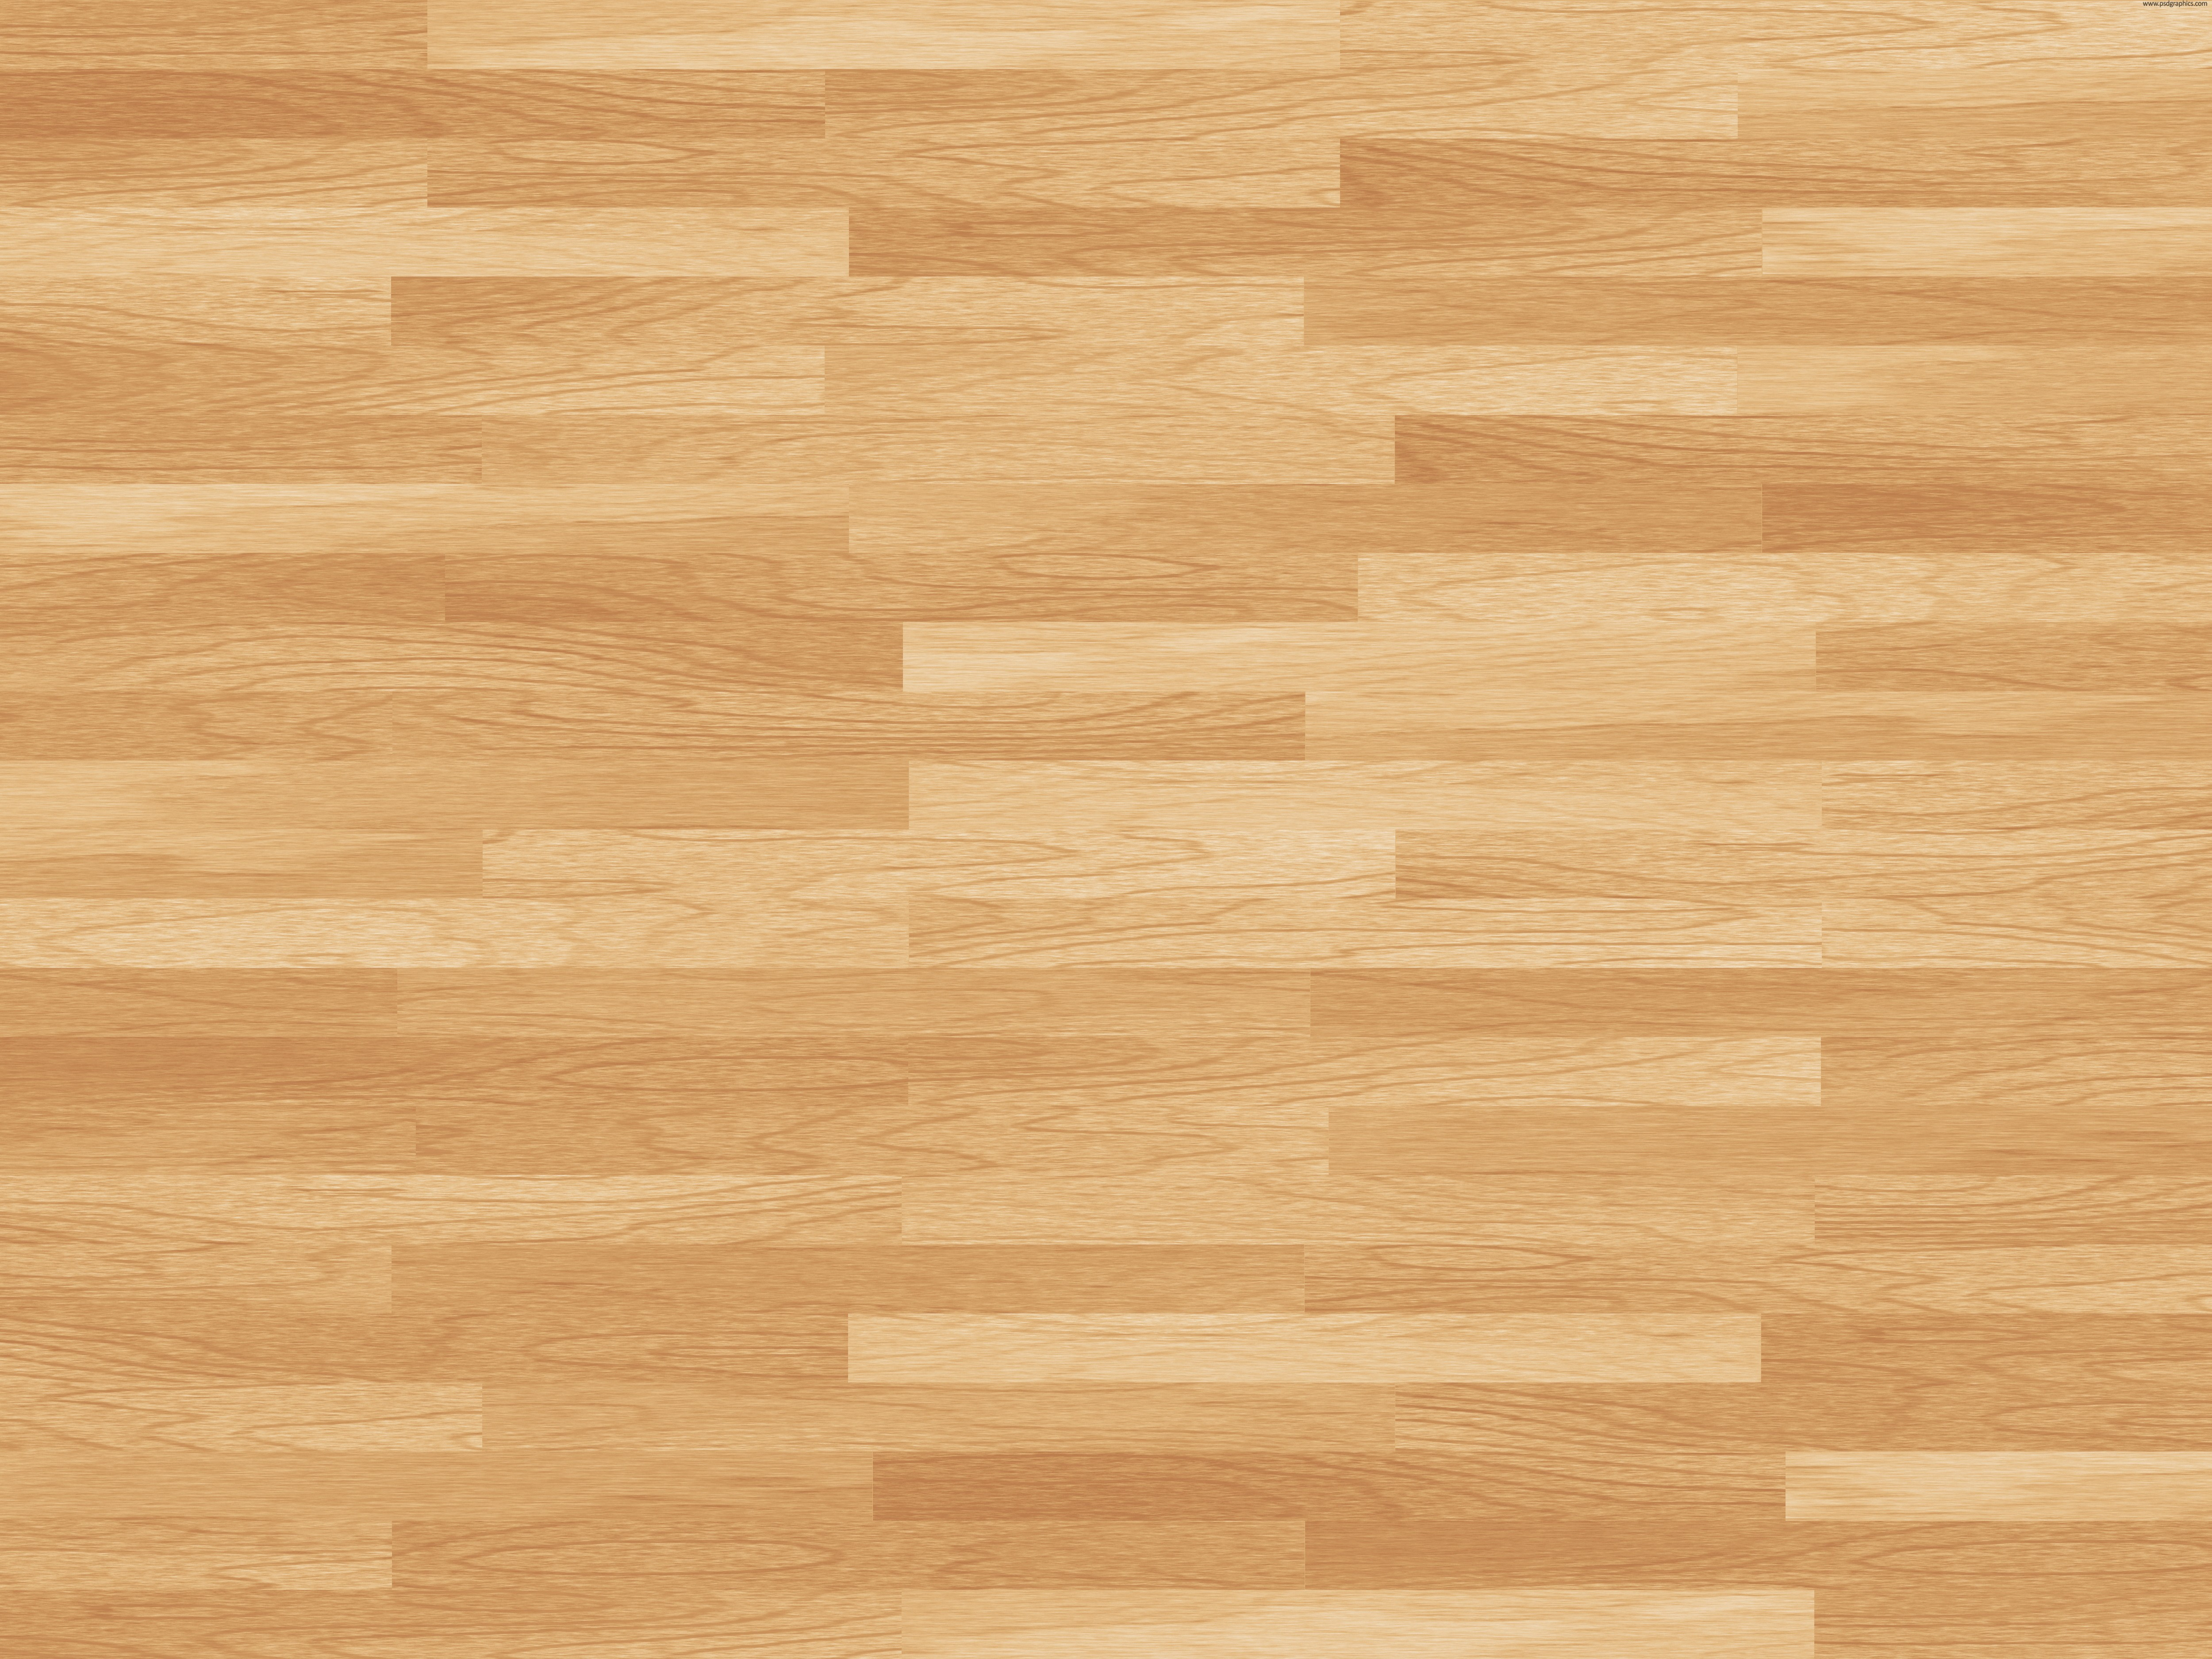 dark hardwood floor texture of hardwood floor patterns awesome wood tile flooring texture wood in hardwood floor patterns lovely hardwood background hd